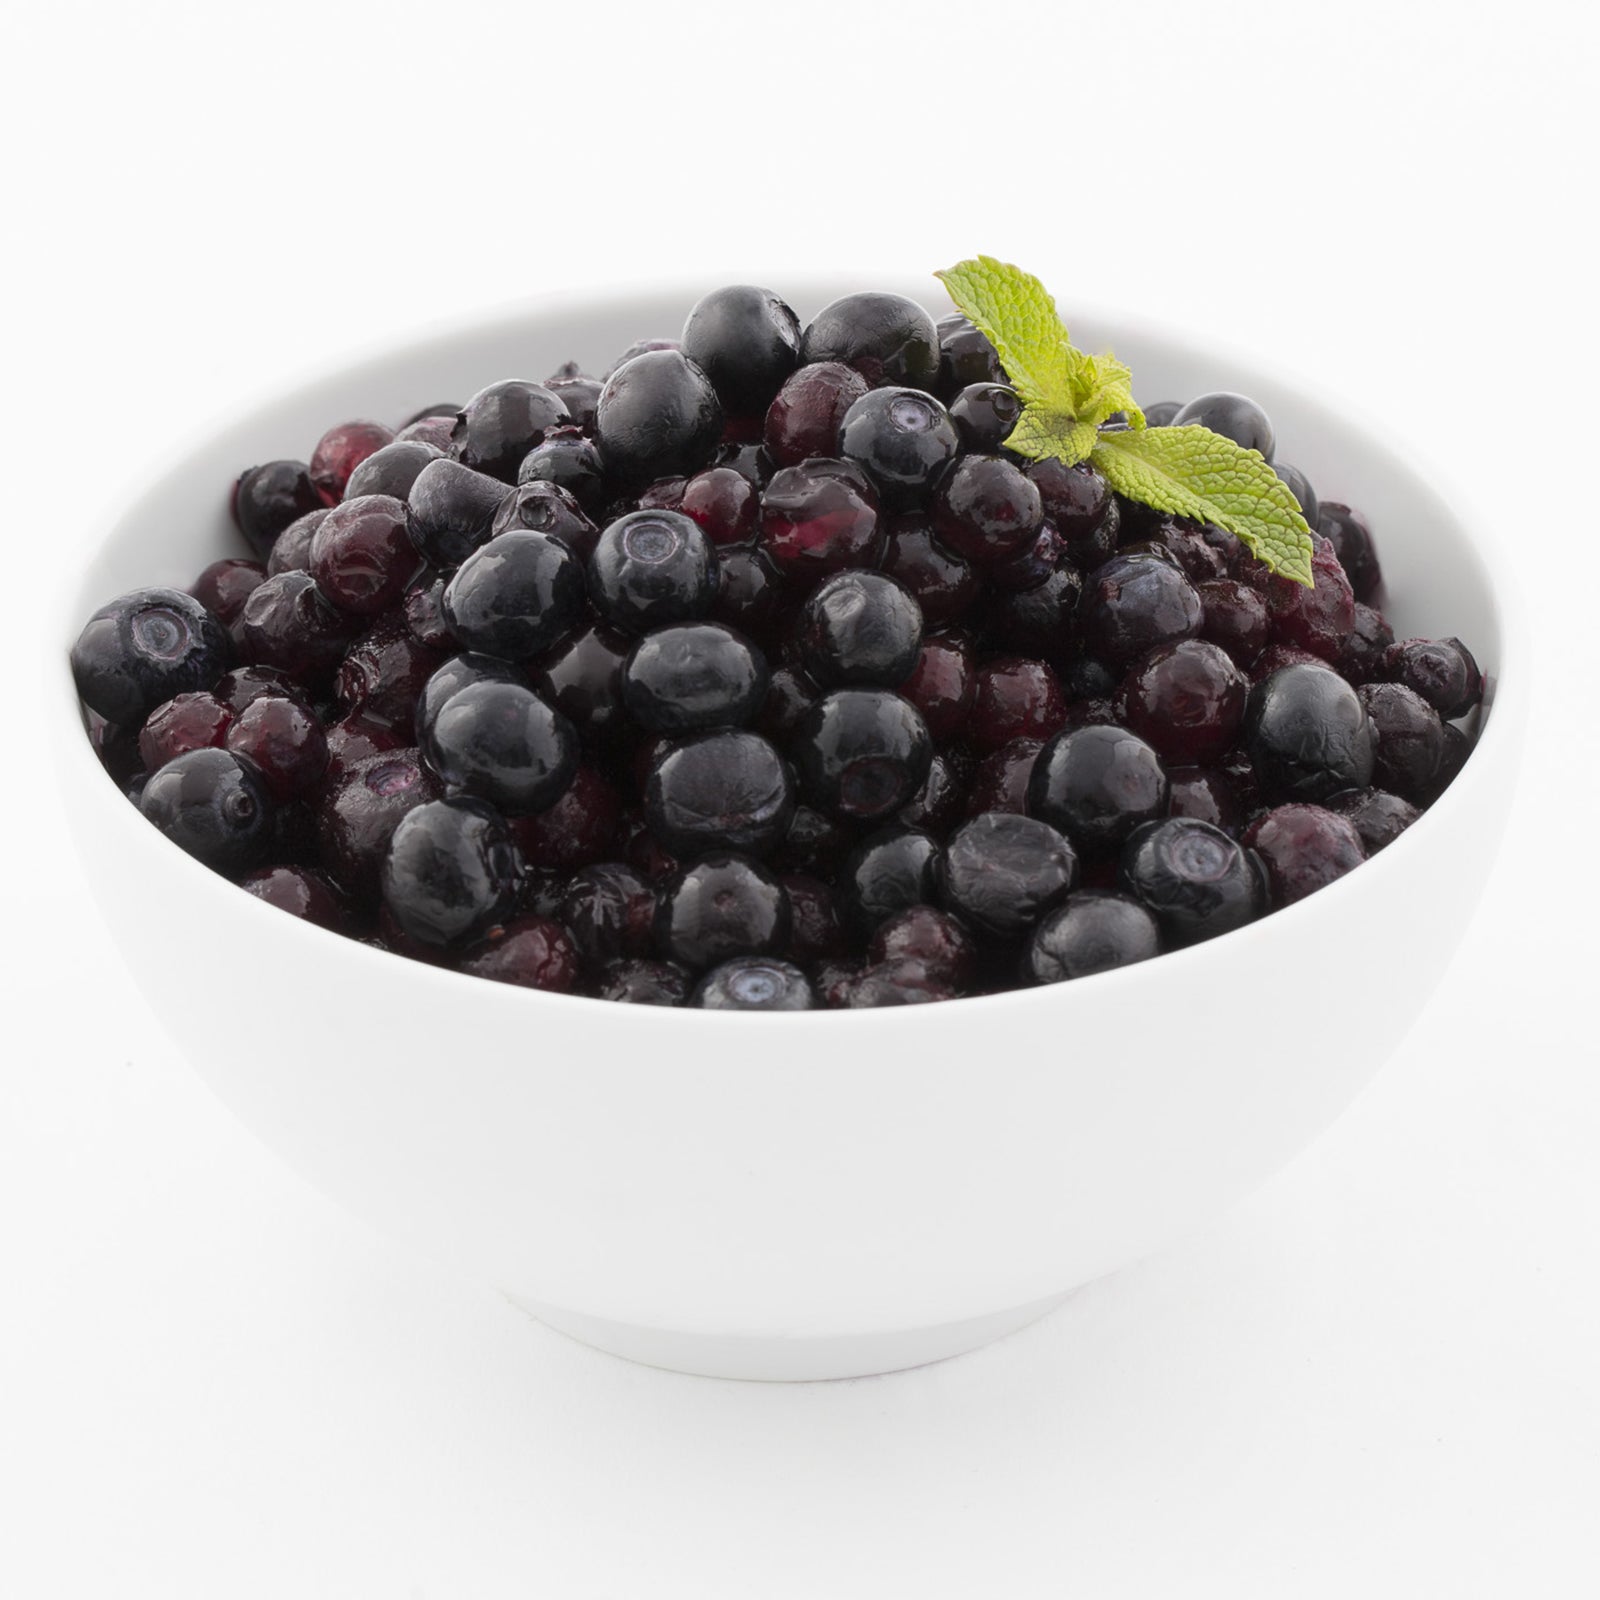 BELOW ZERO Cultivated blueberries